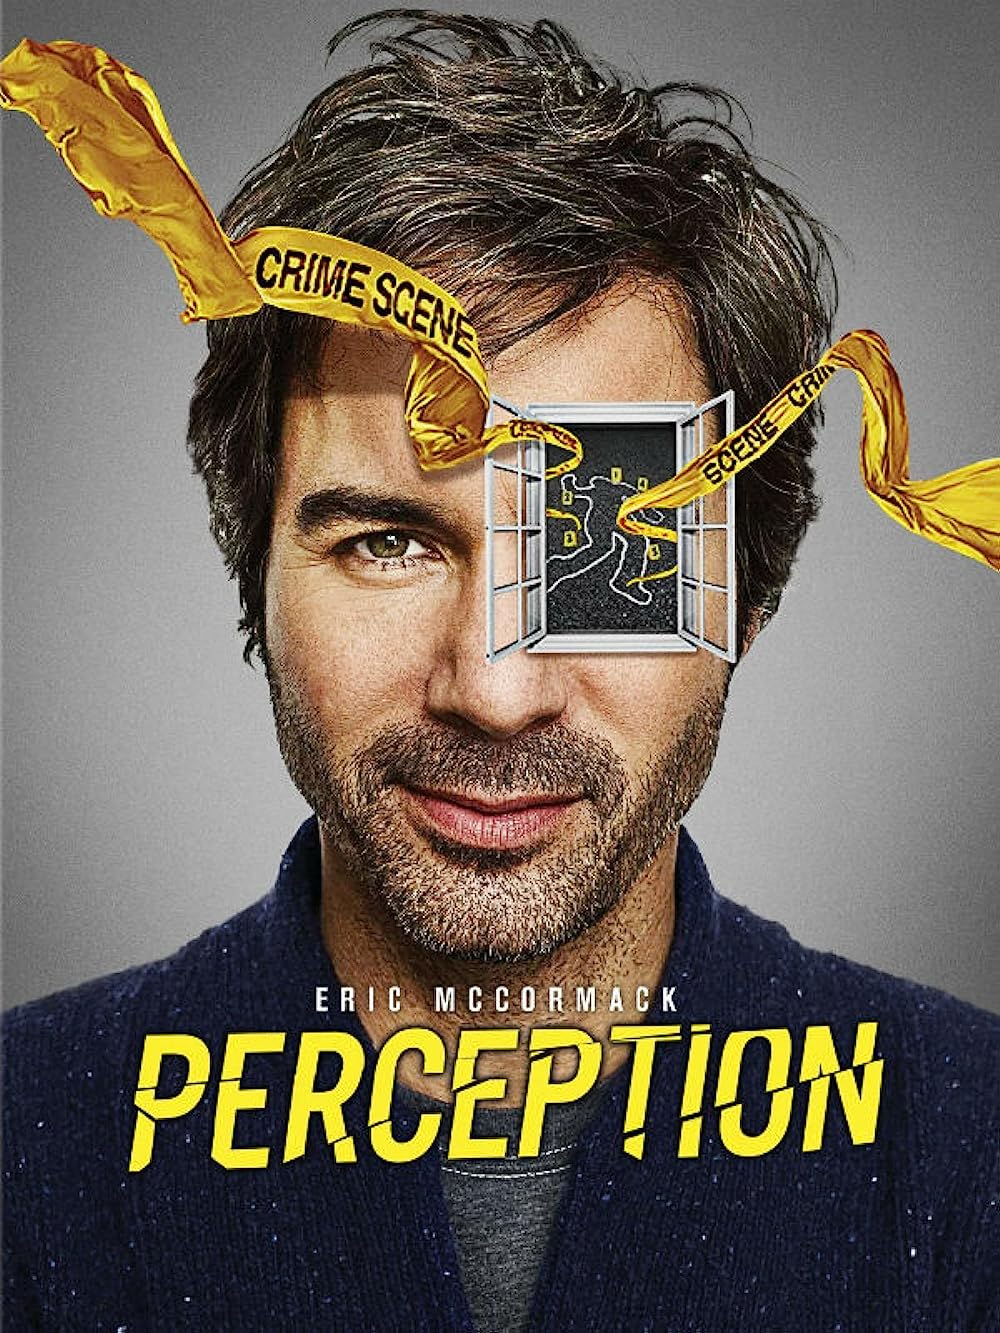 Perception poster